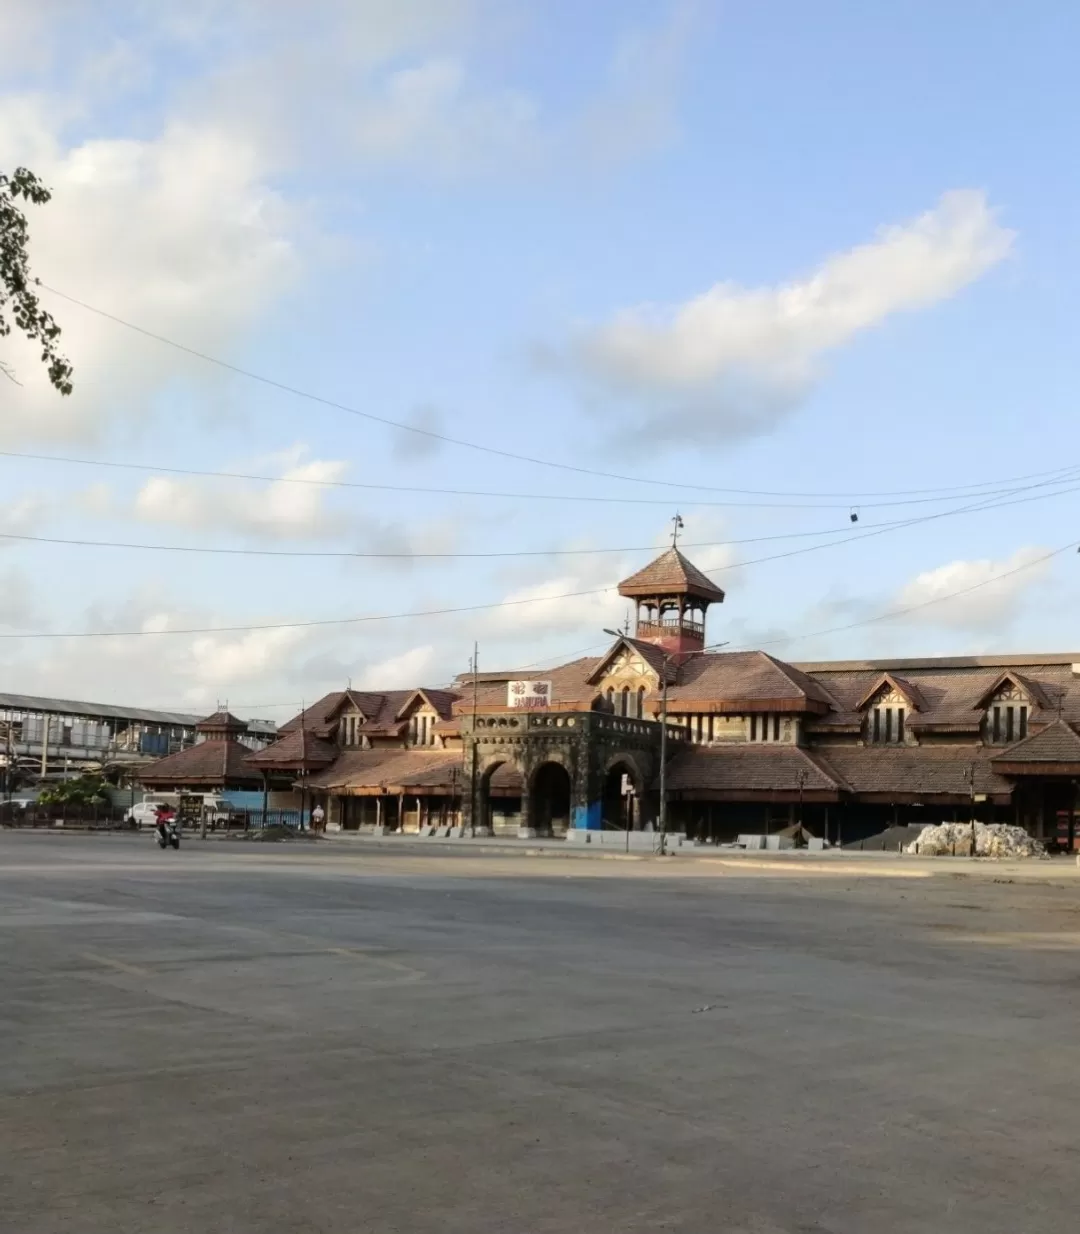 Photo of Bandra Railway Station (W) By Sonali Panagale